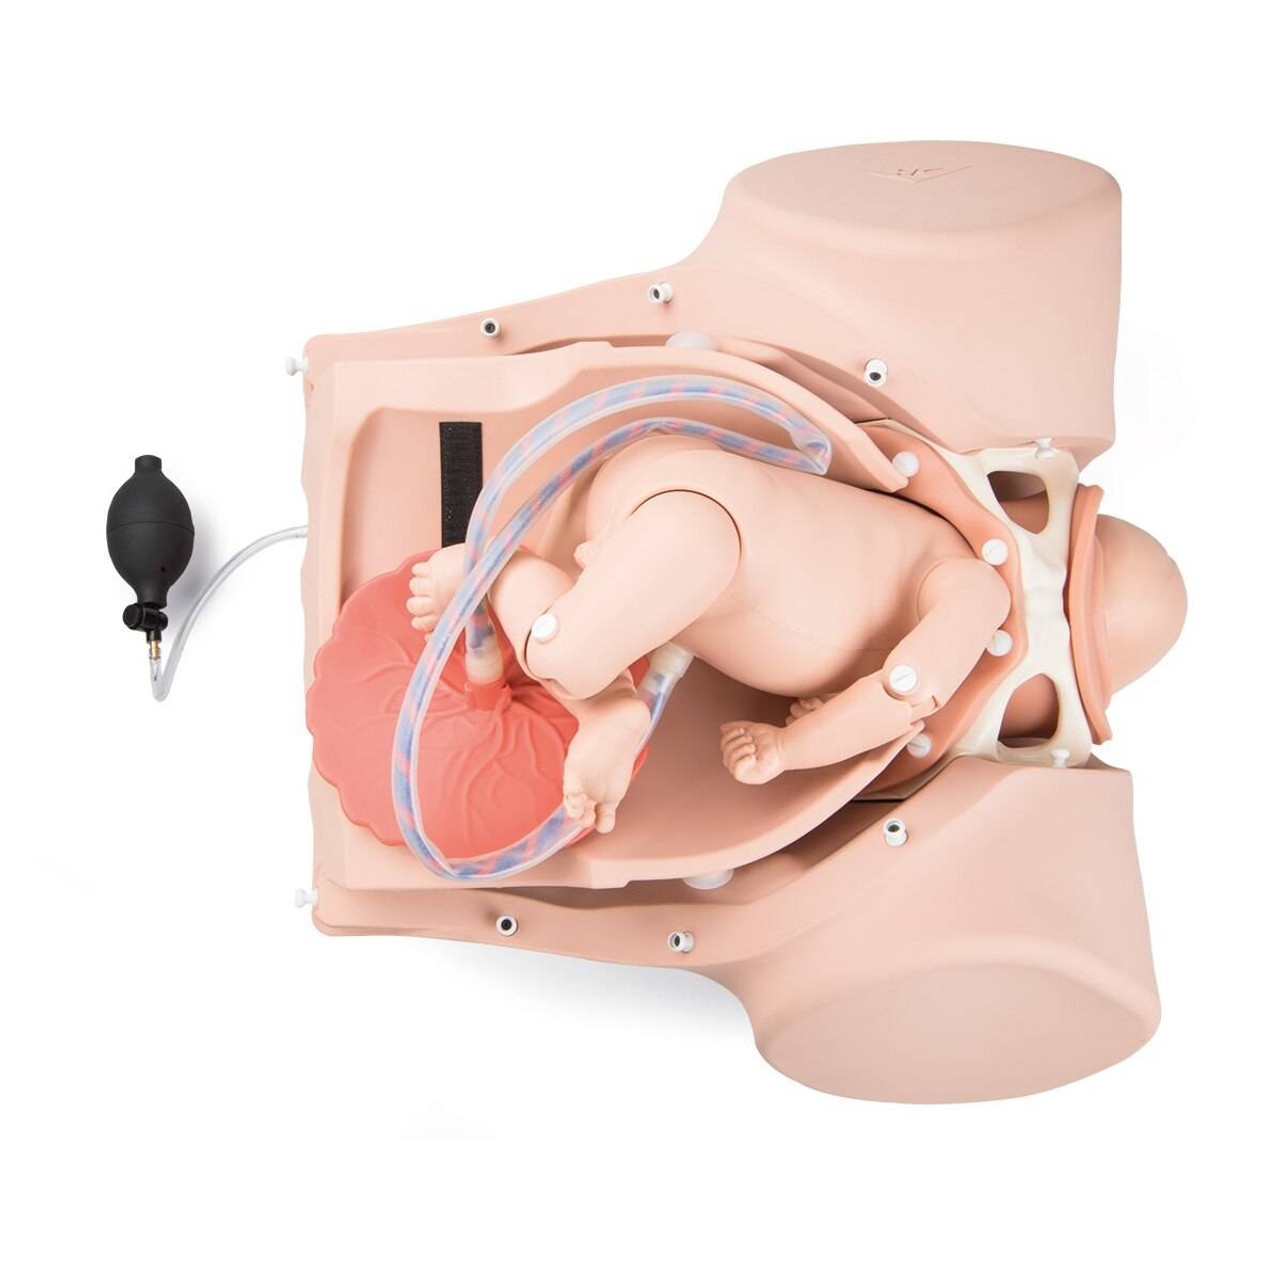 Advanced Childbirth Simulator with fetus placenta for obstetrics Training  Manikin